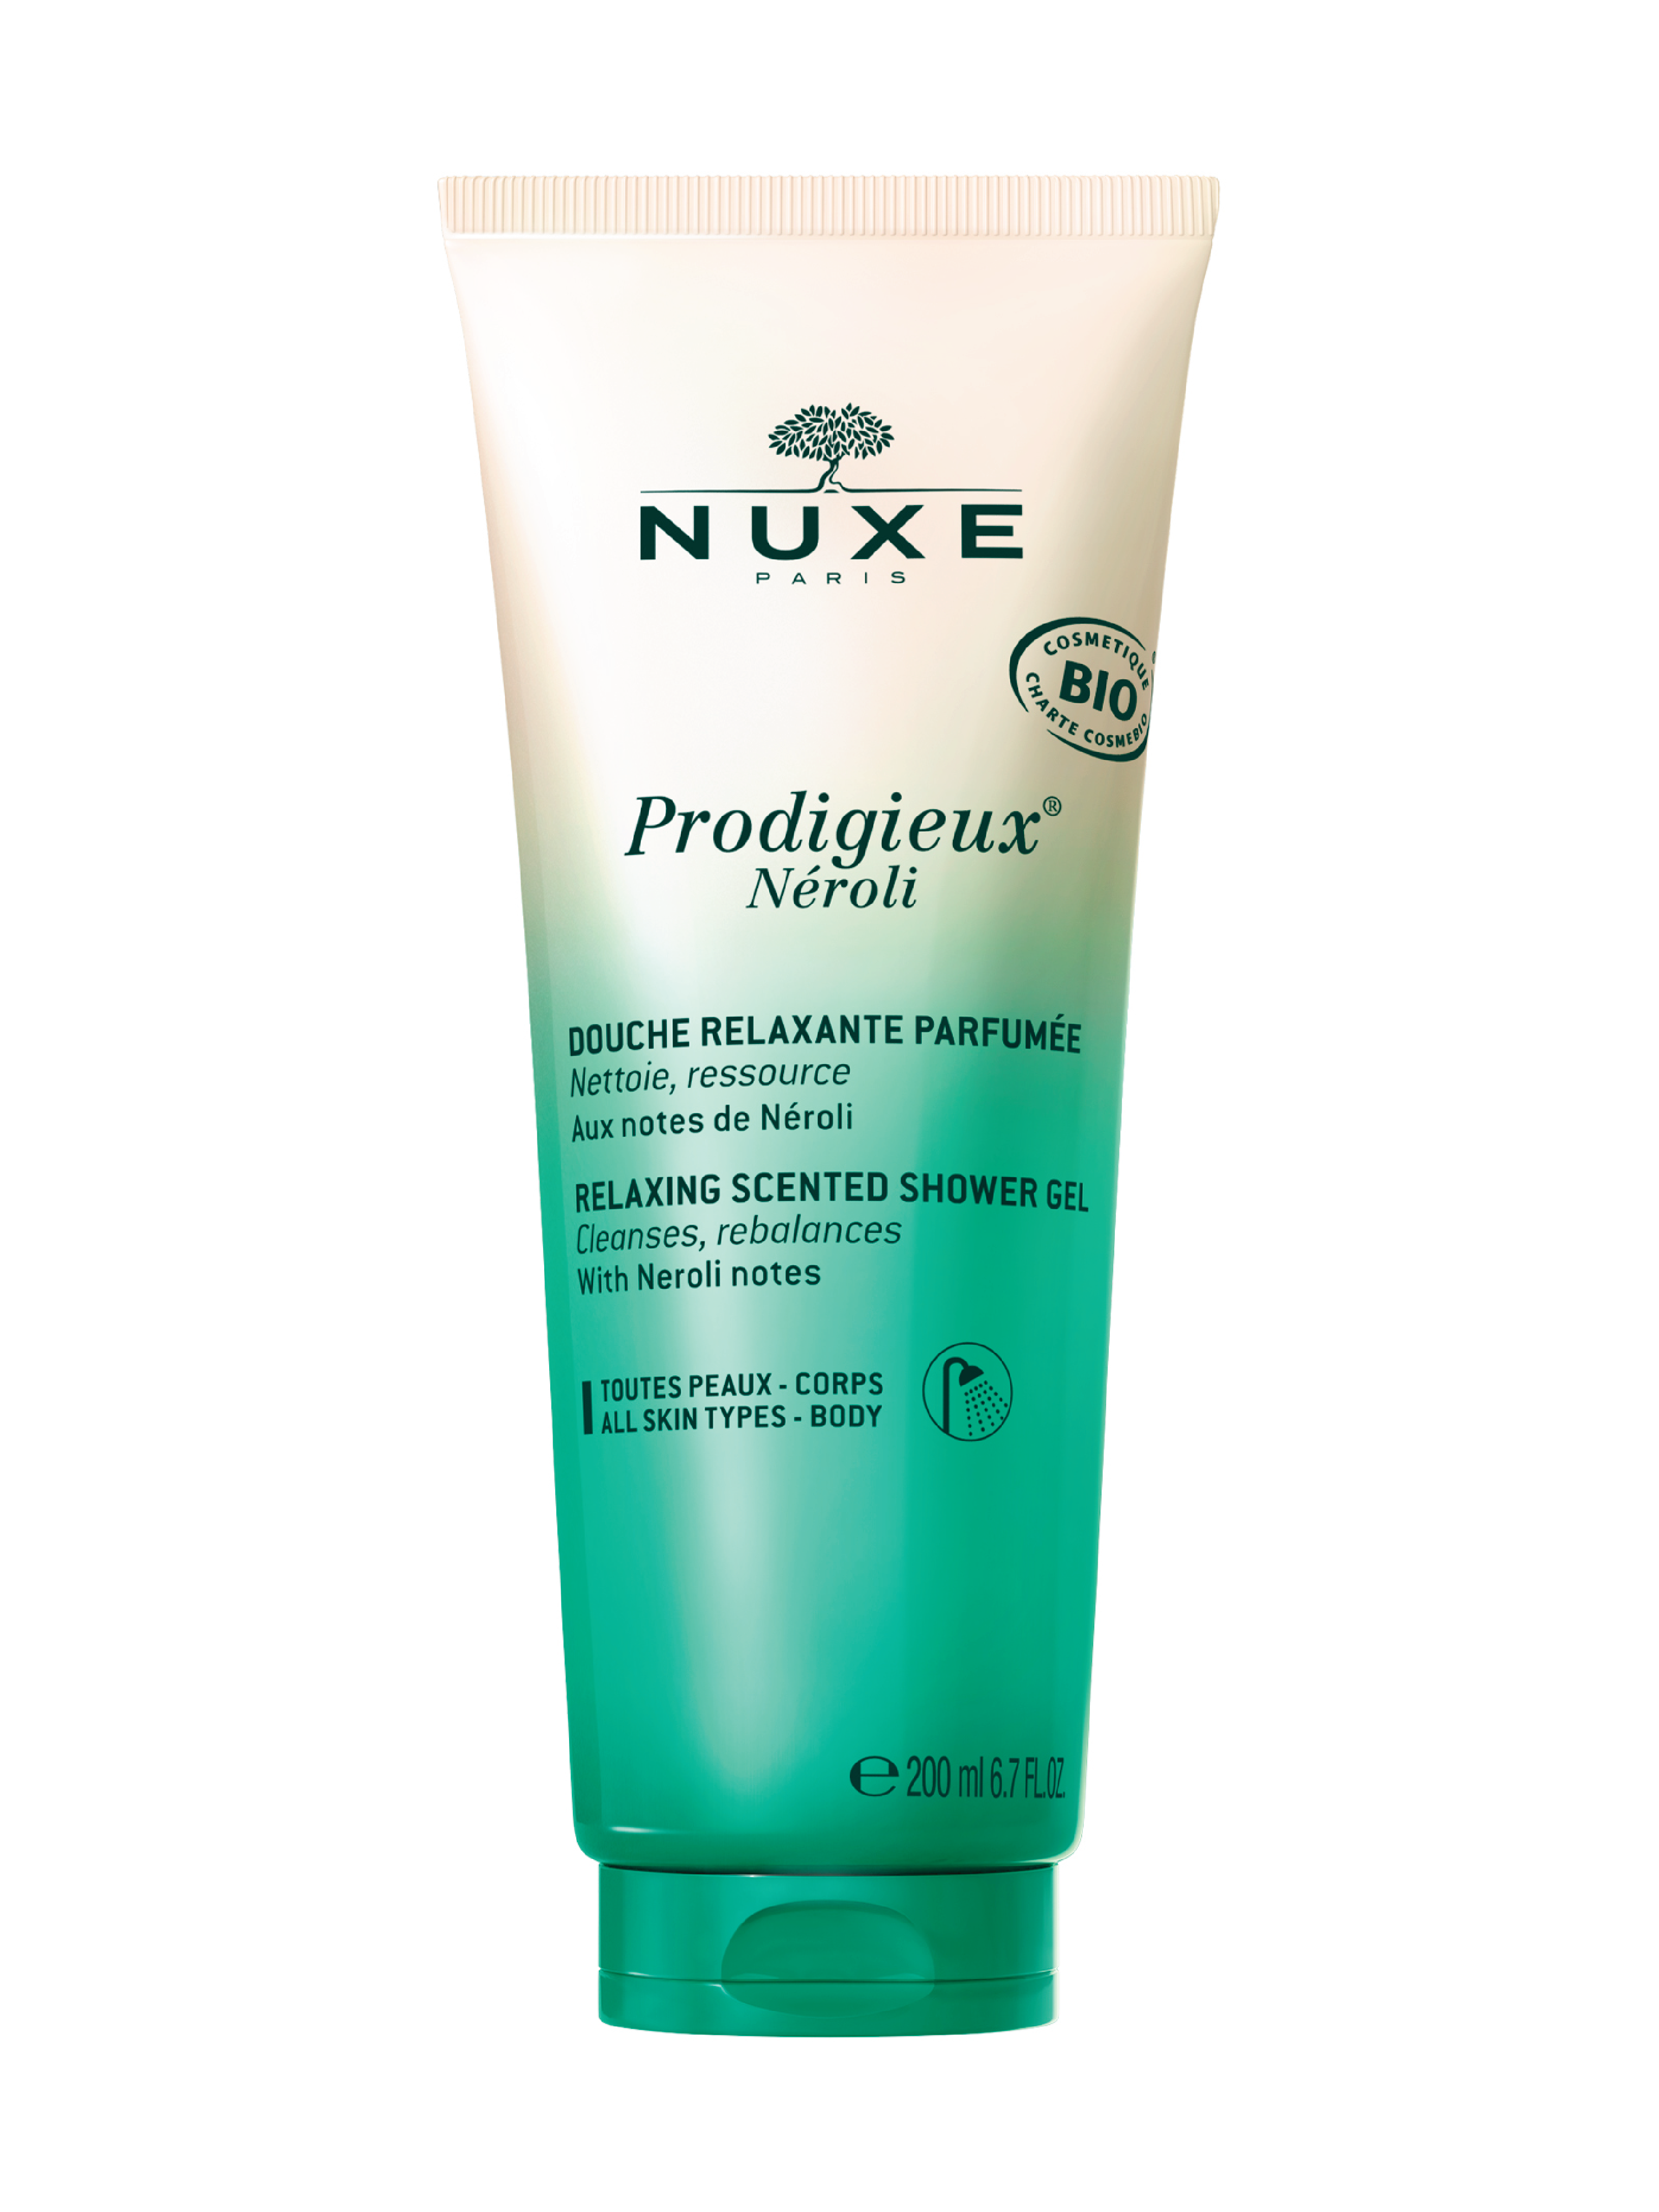 NUXE Prodigieux Neroli Relaxing Scented Shower Gel, 200 ml